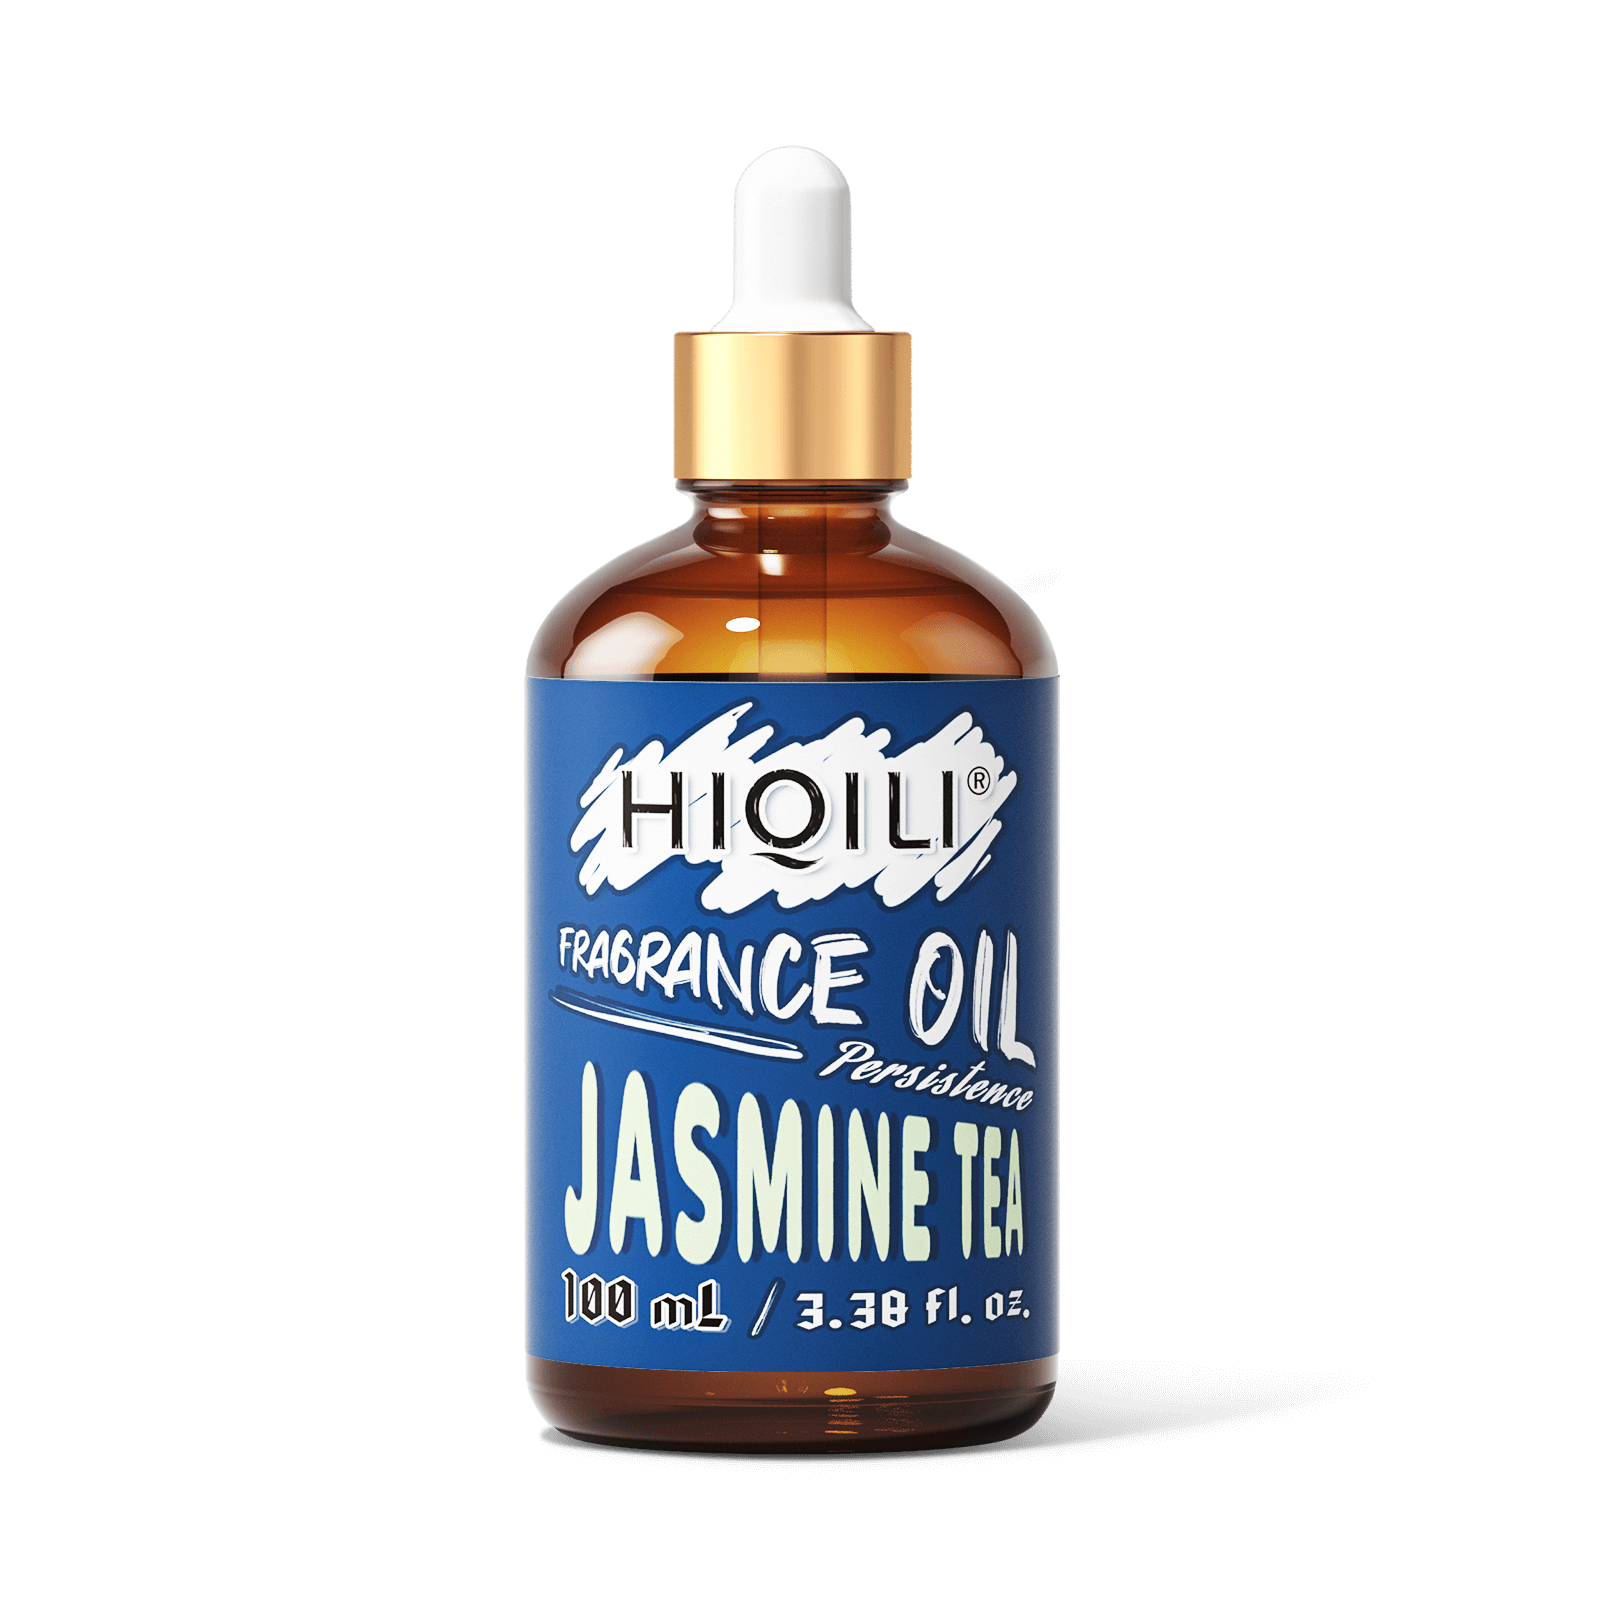 Jasmine Tea Fragrance Oil